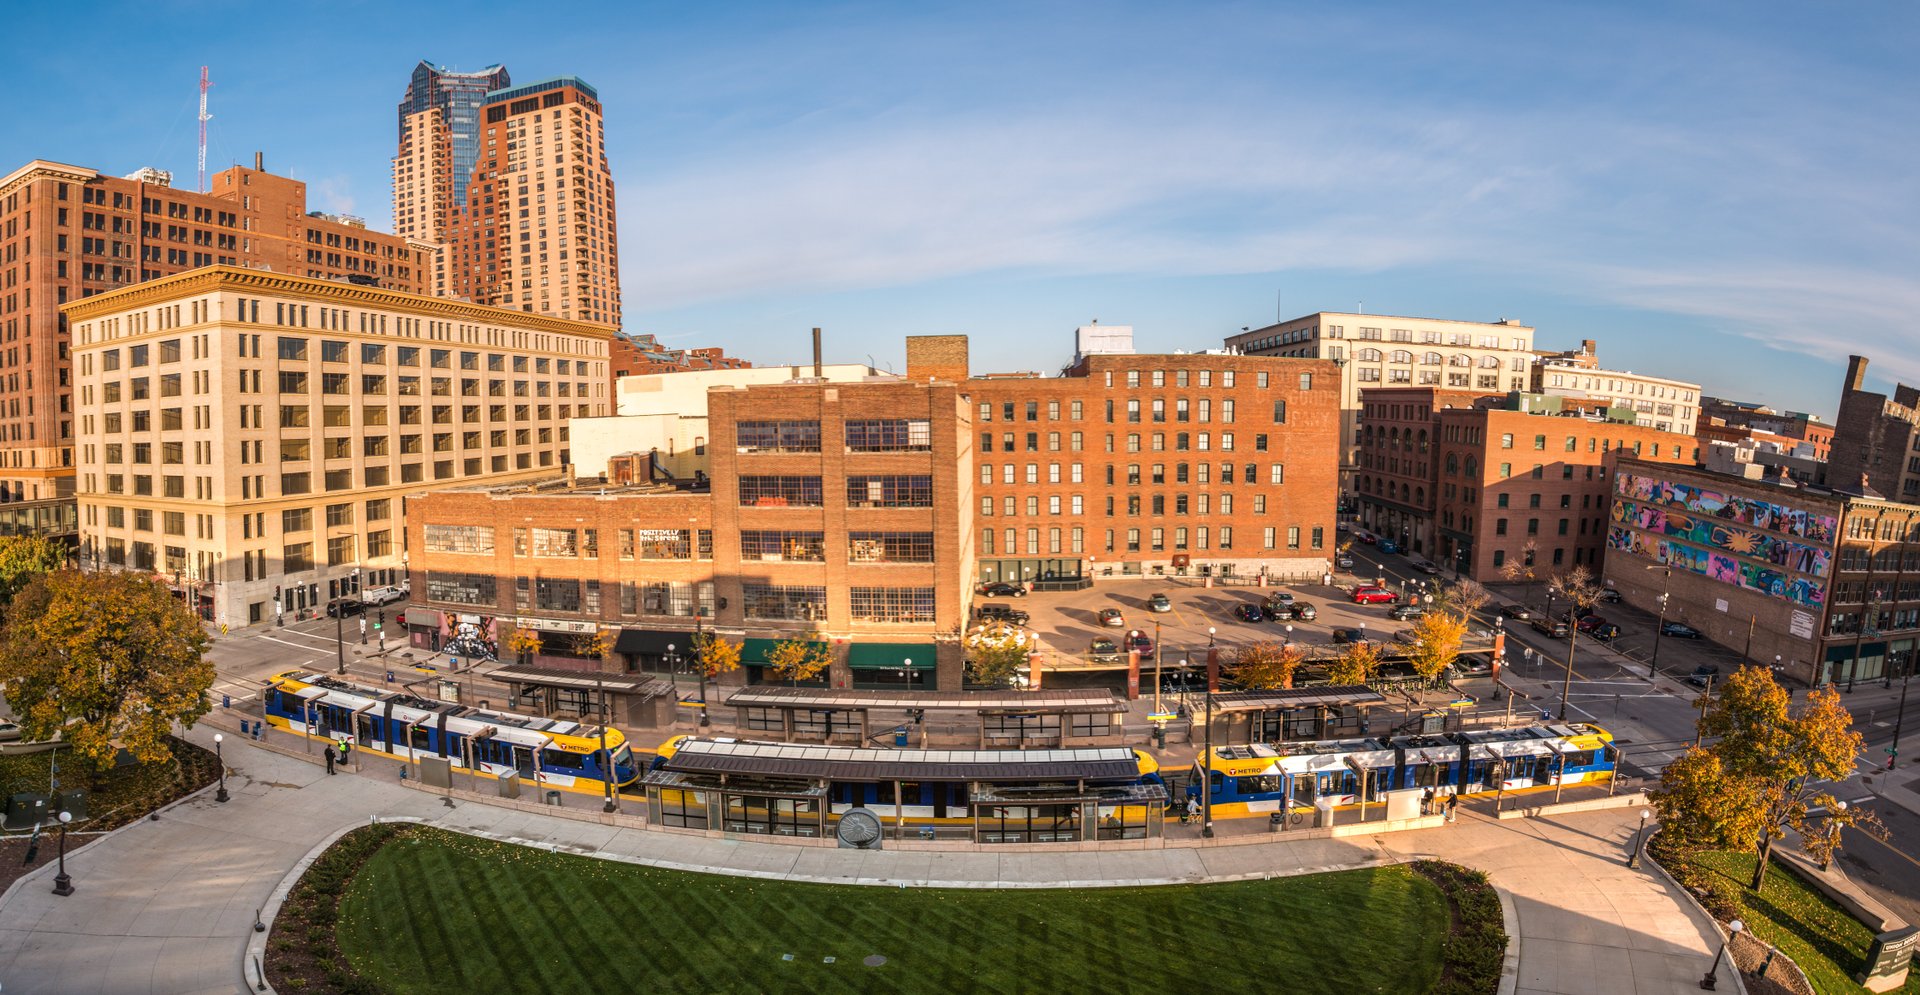 New park in Saint Paul metro officially opens - CBS Minnesota